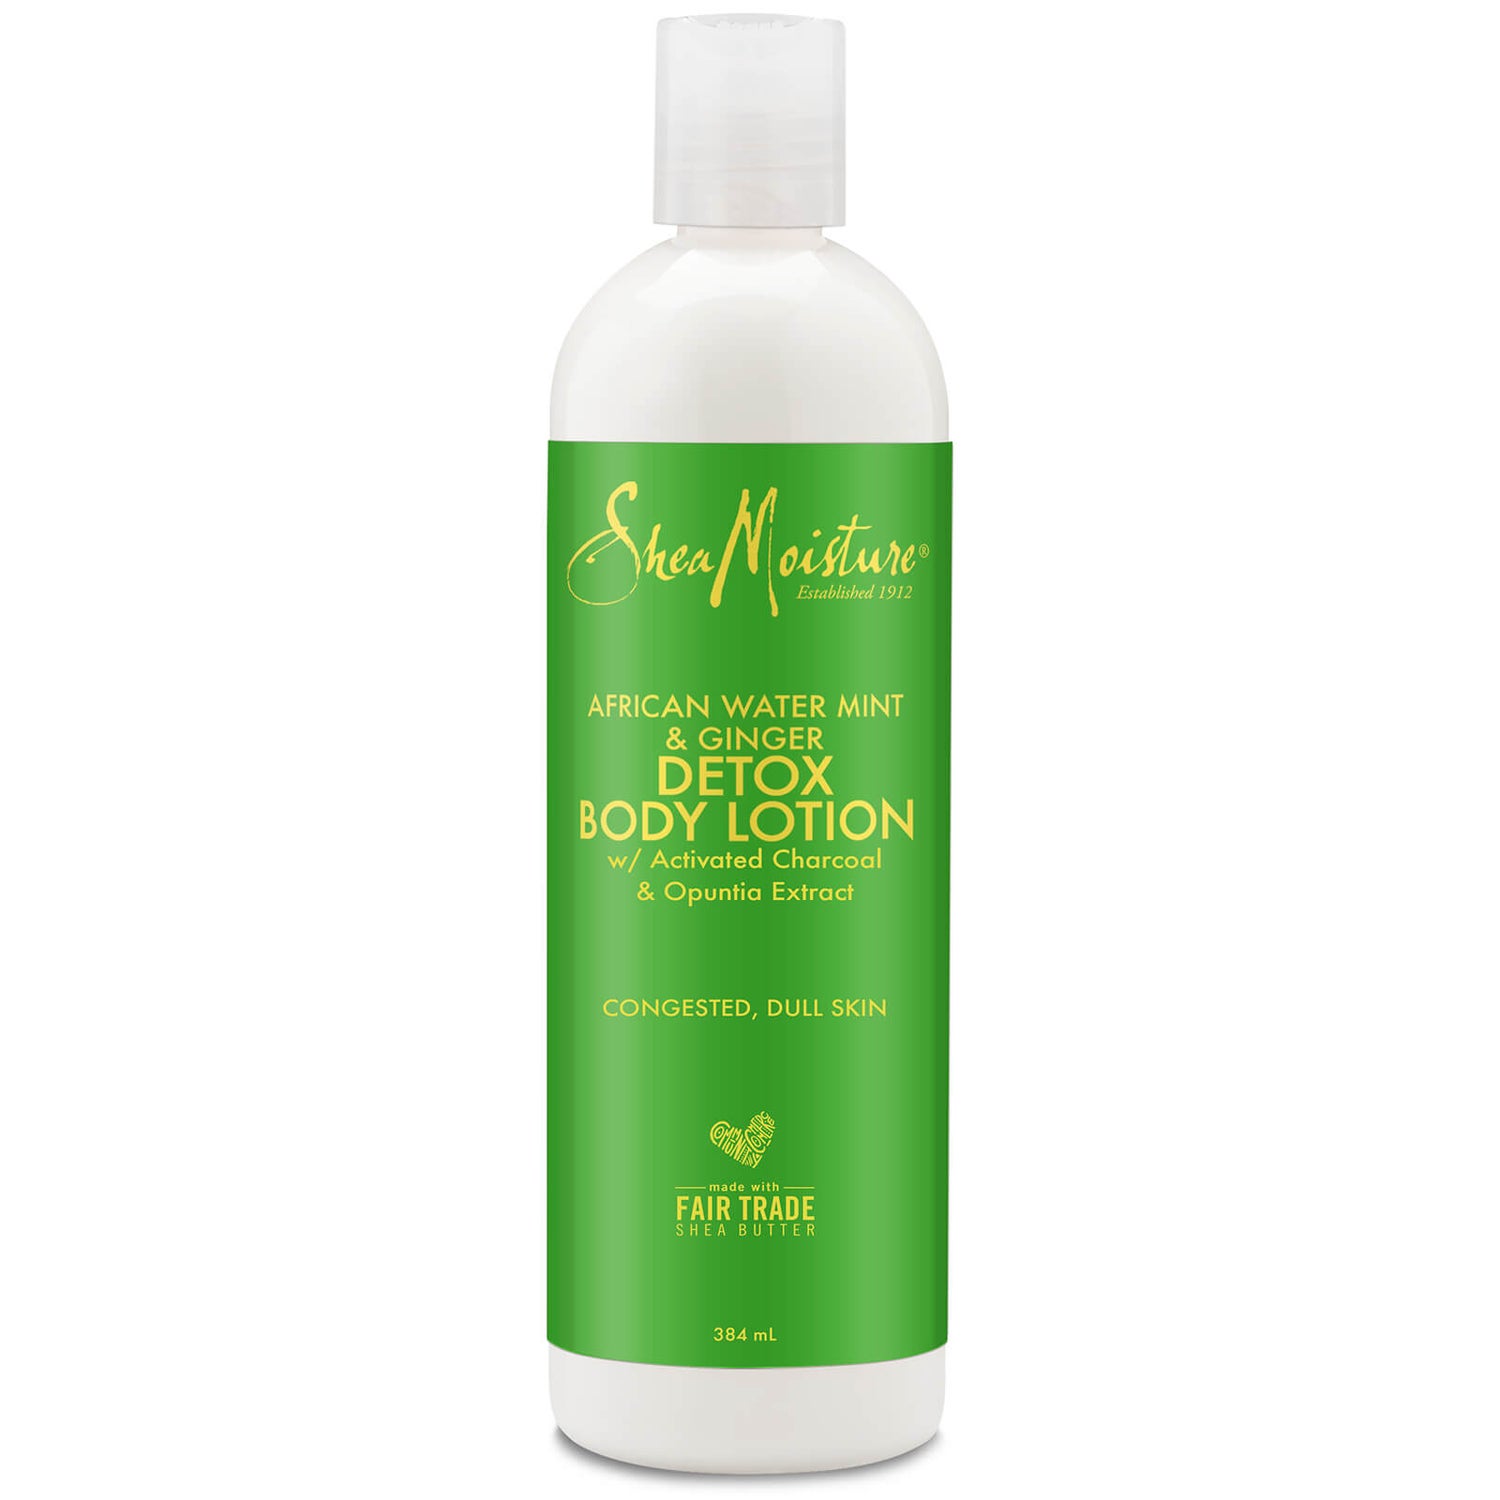 Shea Moisture African Water Mint & Ginger Detox Body Lotion 384 ml